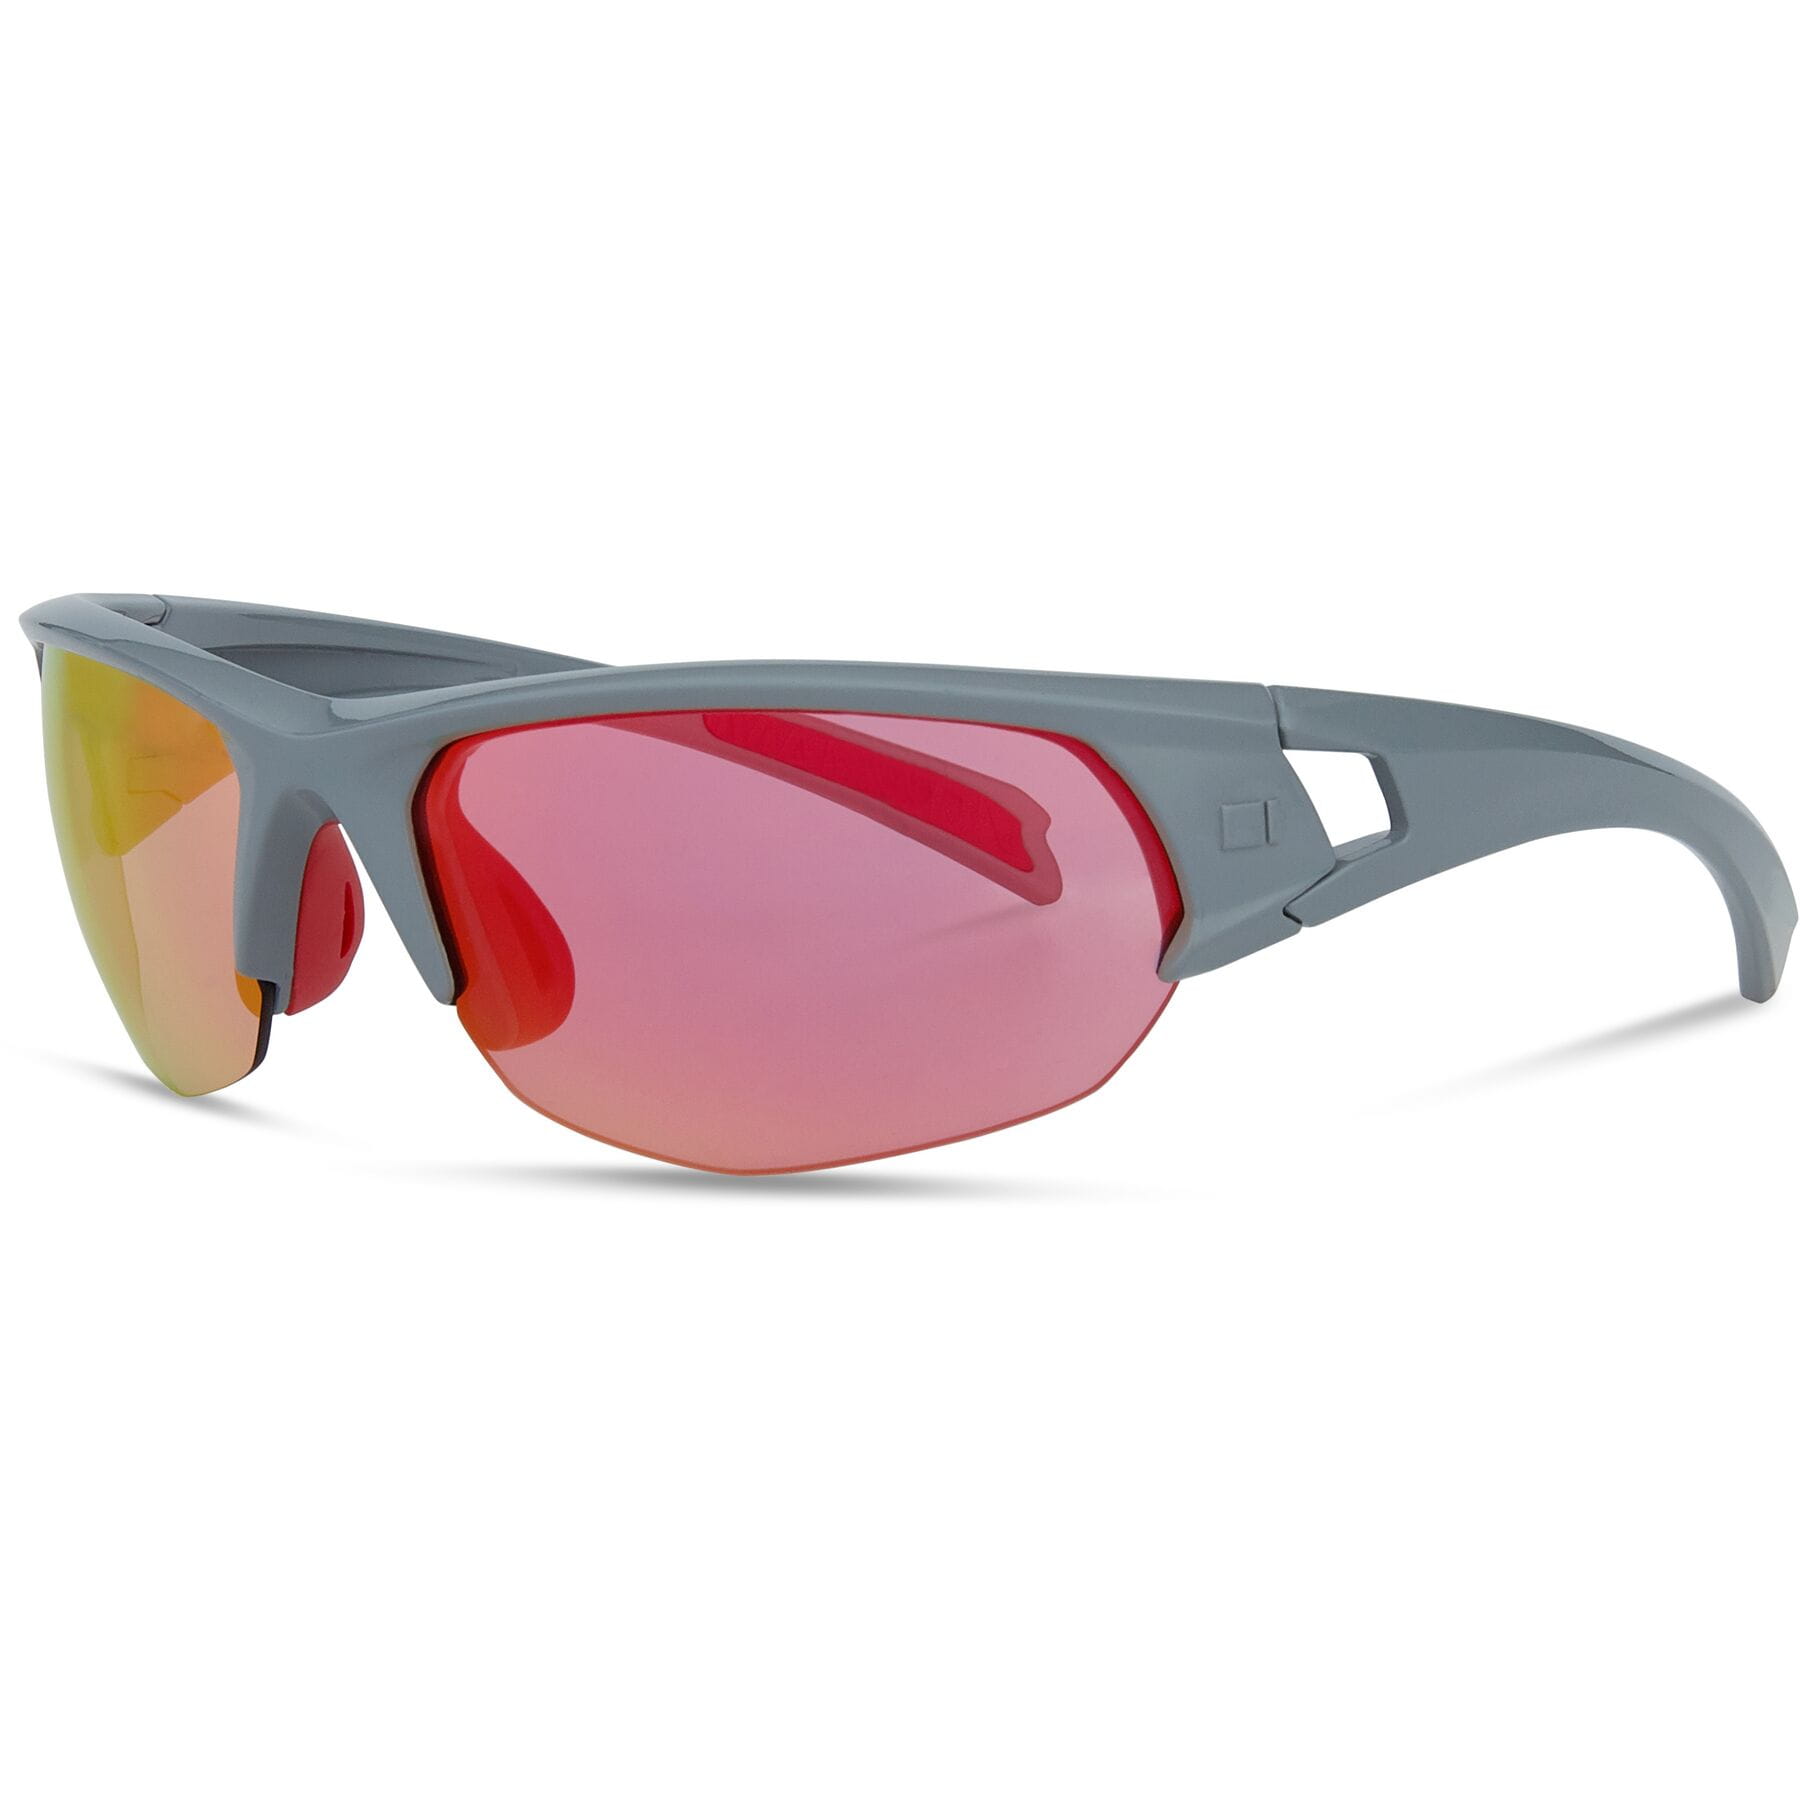 Madison Mission Sunglasses 3 Lens Pack Gloss Cloud Grey £29.99